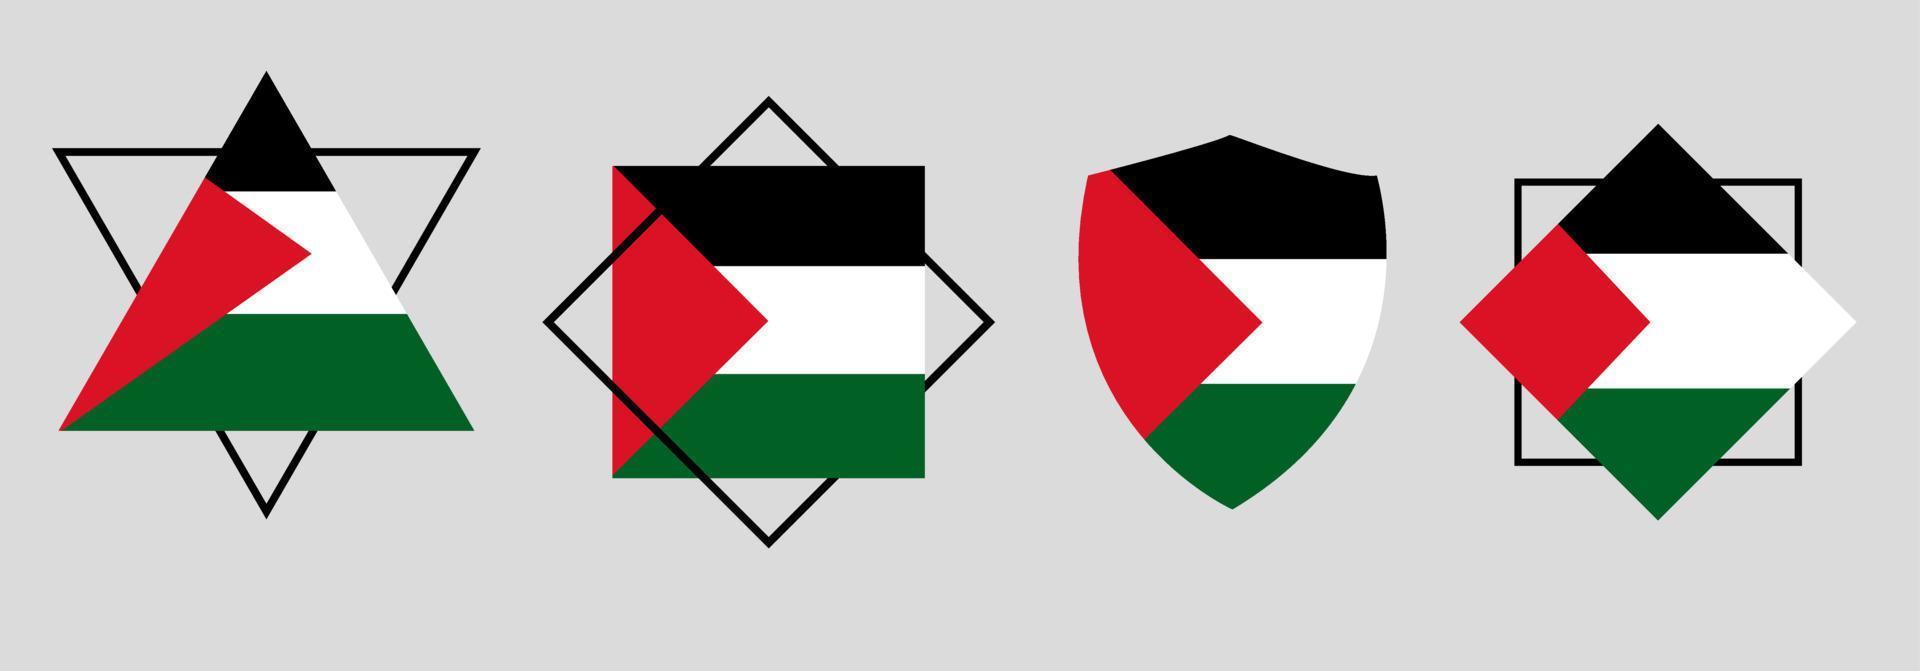 Flagge von Palästina. Palästina-Nationalflaggen-Vektor-Design-Set. vektor